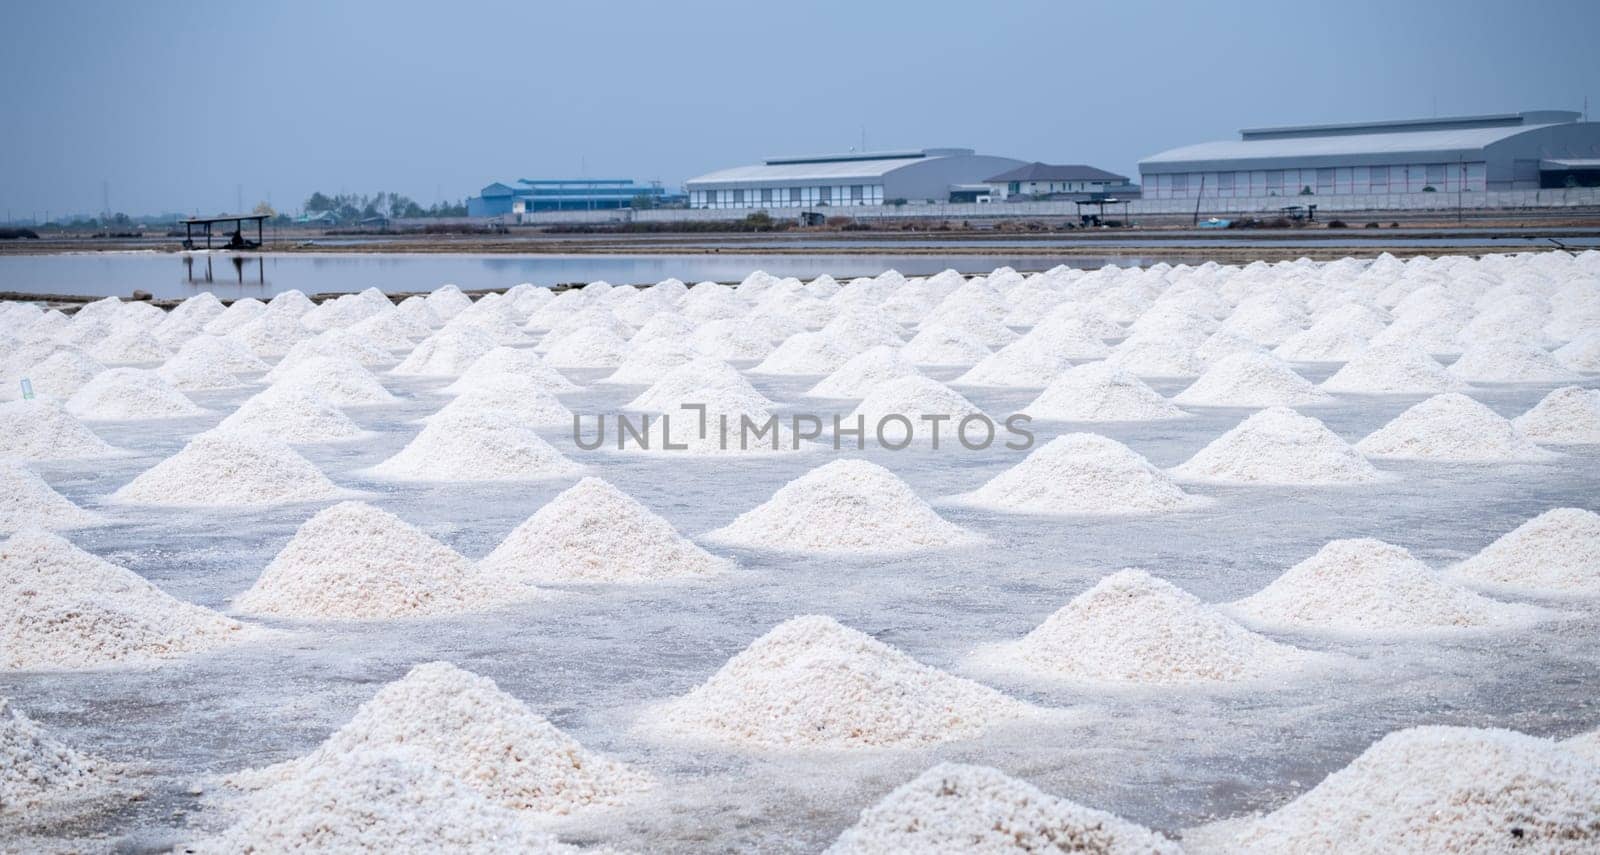 Landscape sea salt farm in Thailand. Brine salt. Raw material of salt industrial. Sodium Chloride. Evaporation and crystallization of sea water. Salt harvesting. Agriculture industry. Traditional farm by Fahroni